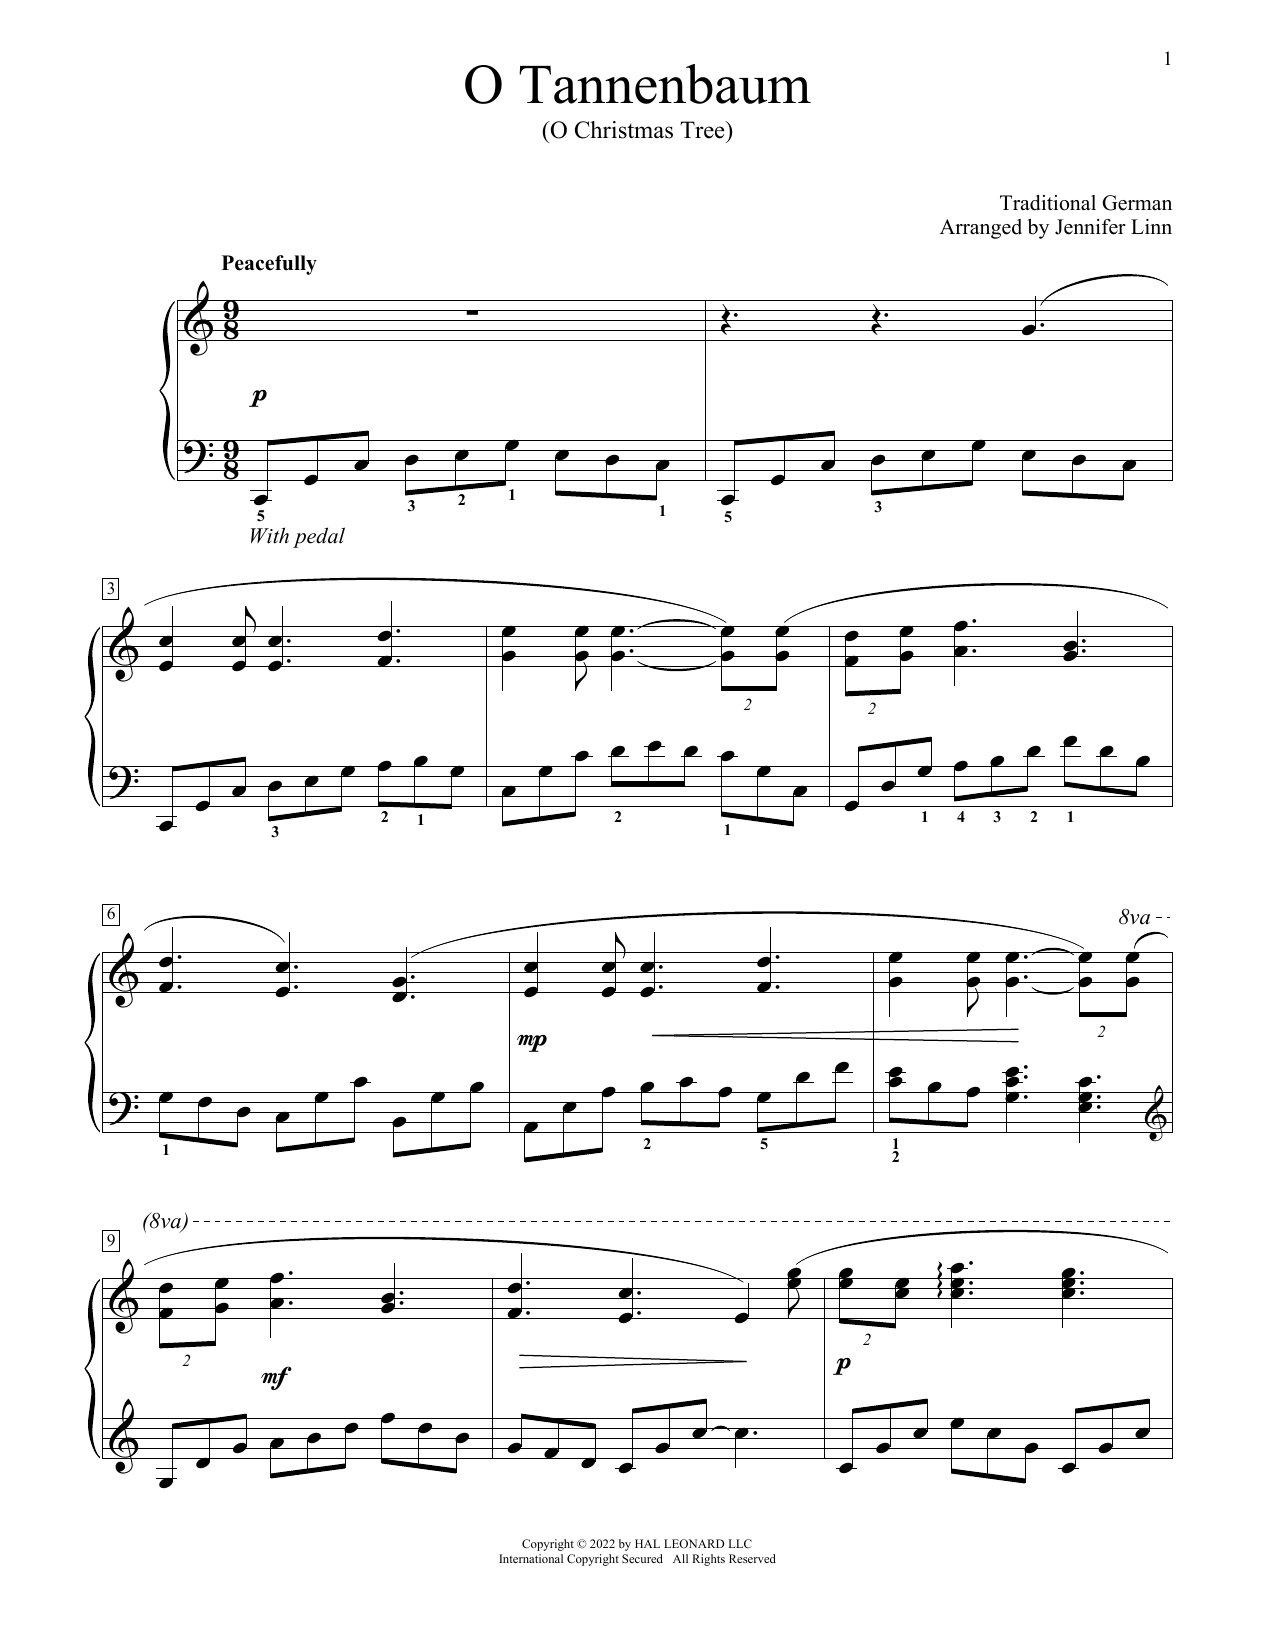 Traditional German O Tannenbaum (arr. Jennifer Linn) Sheet Music Notes & Chords for Educational Piano - Download or Print PDF